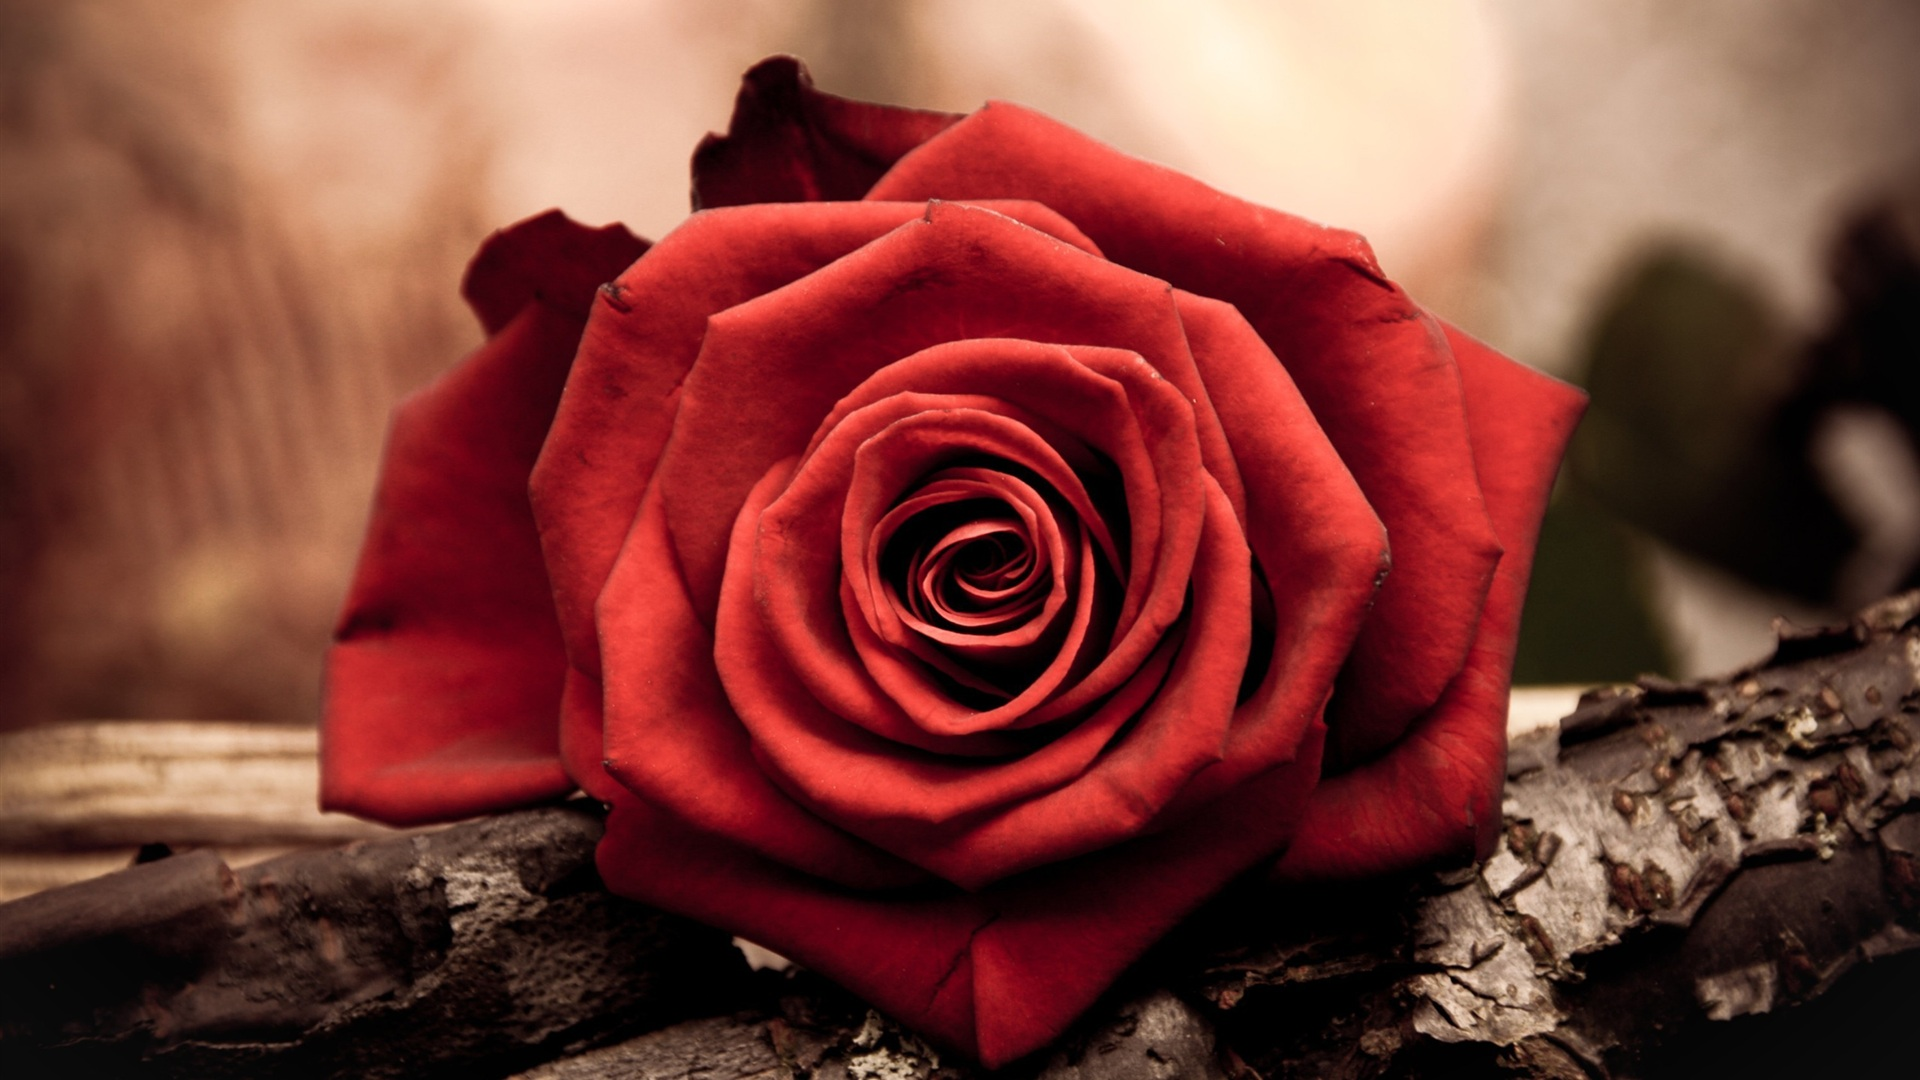 Red Rose Flower Desktop Wallpaper Magic4walls